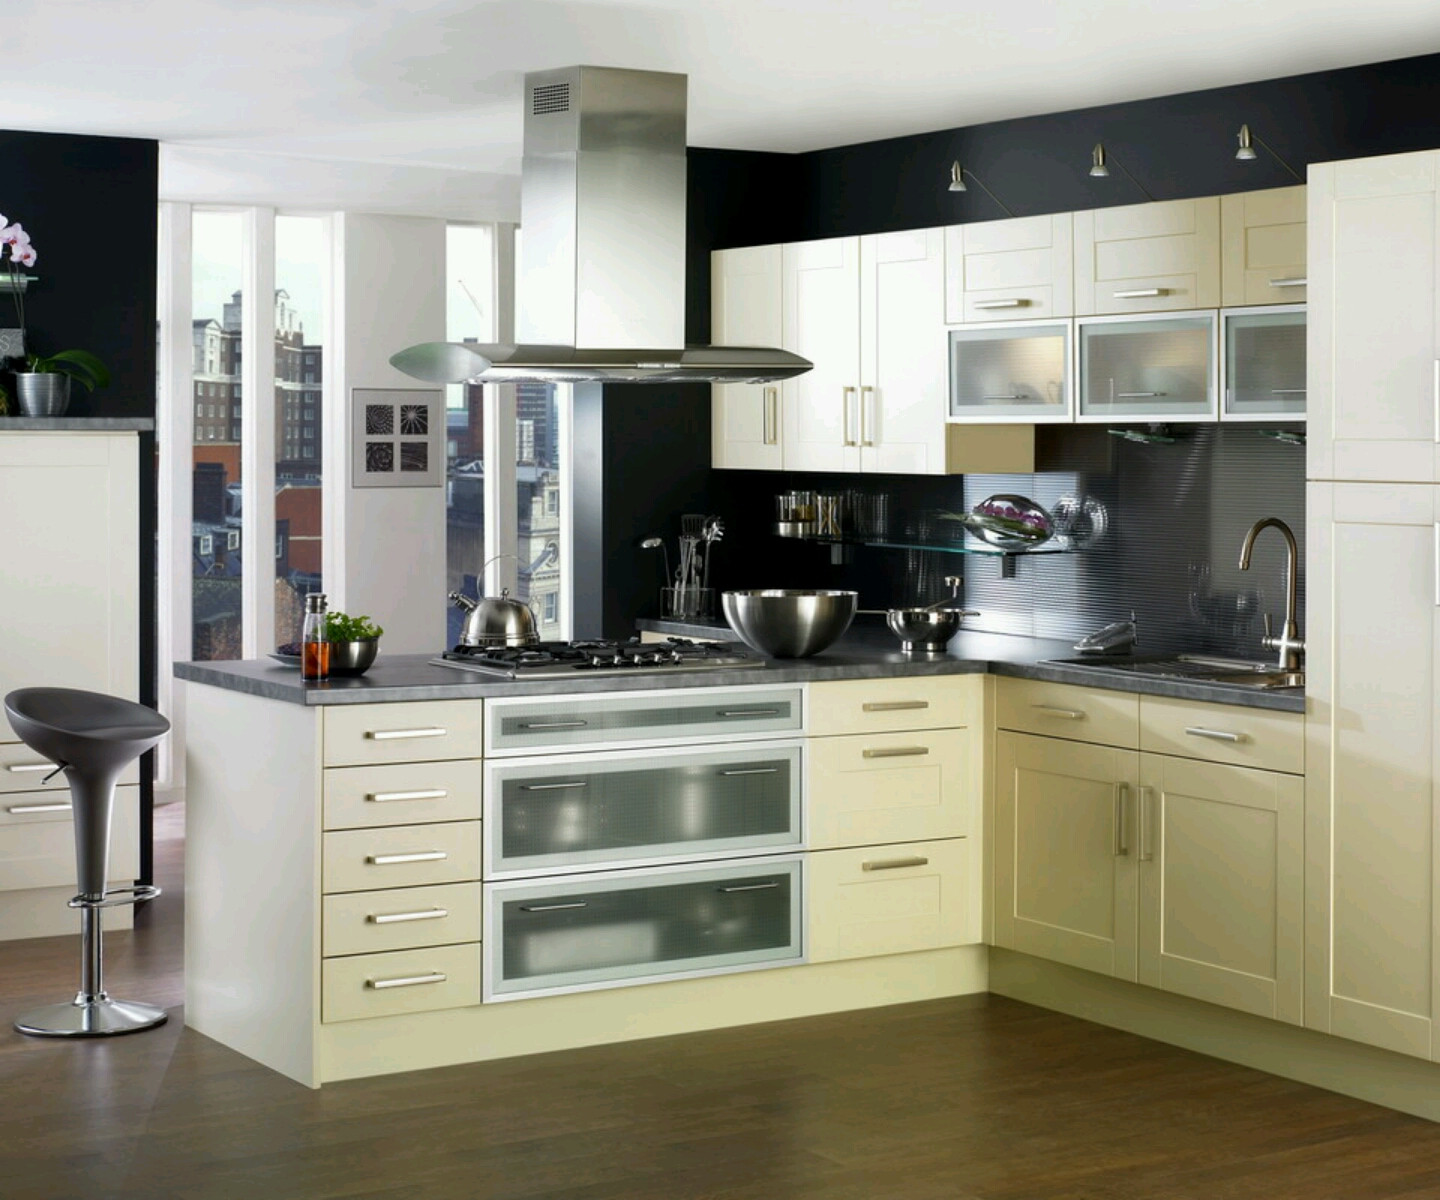 Bathroom Cabinet Ideas Design
 New home designs latest Kitchen cabinets designs modern